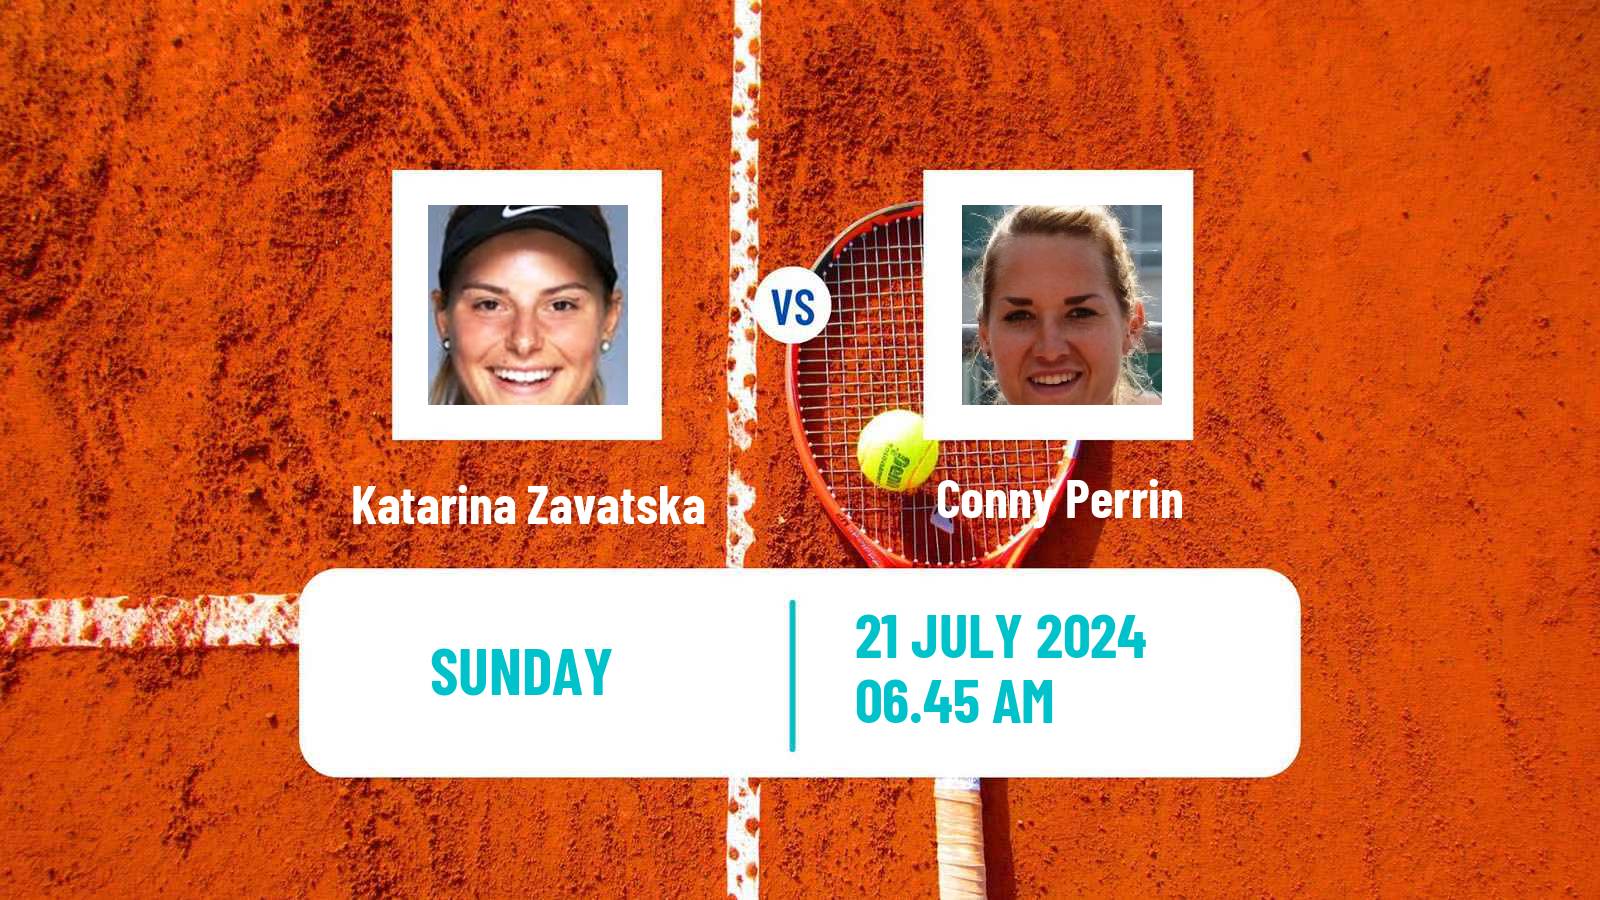 Tennis WTA Prague Katarina Zavatska - Conny Perrin